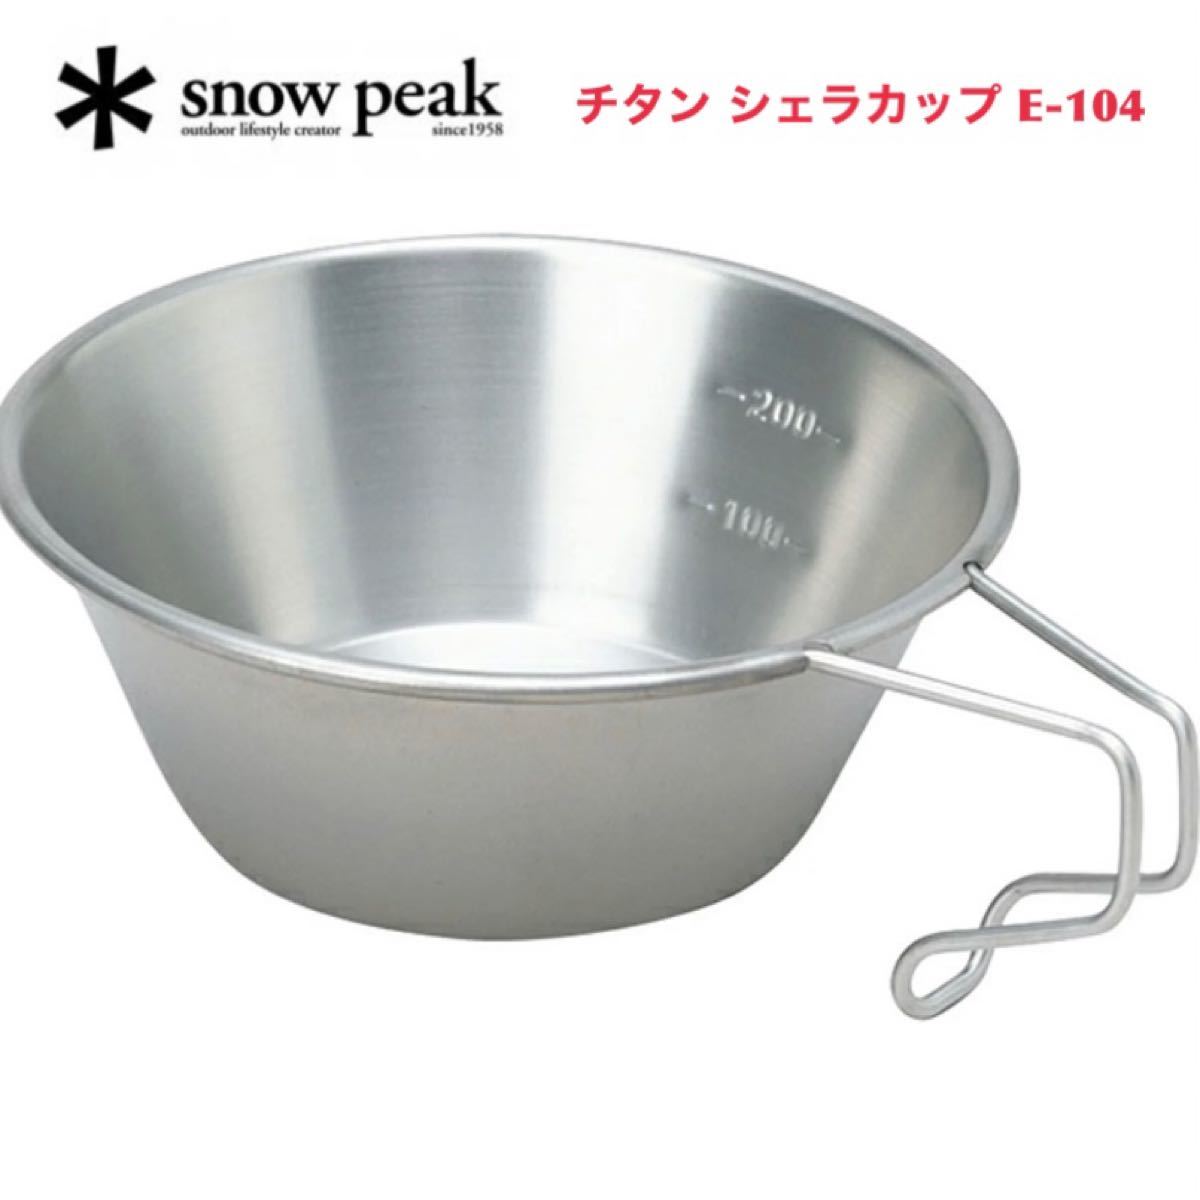 snow peak スノーピーク チタンシェラカップ E-104 食器 キャンプ 調理器具 